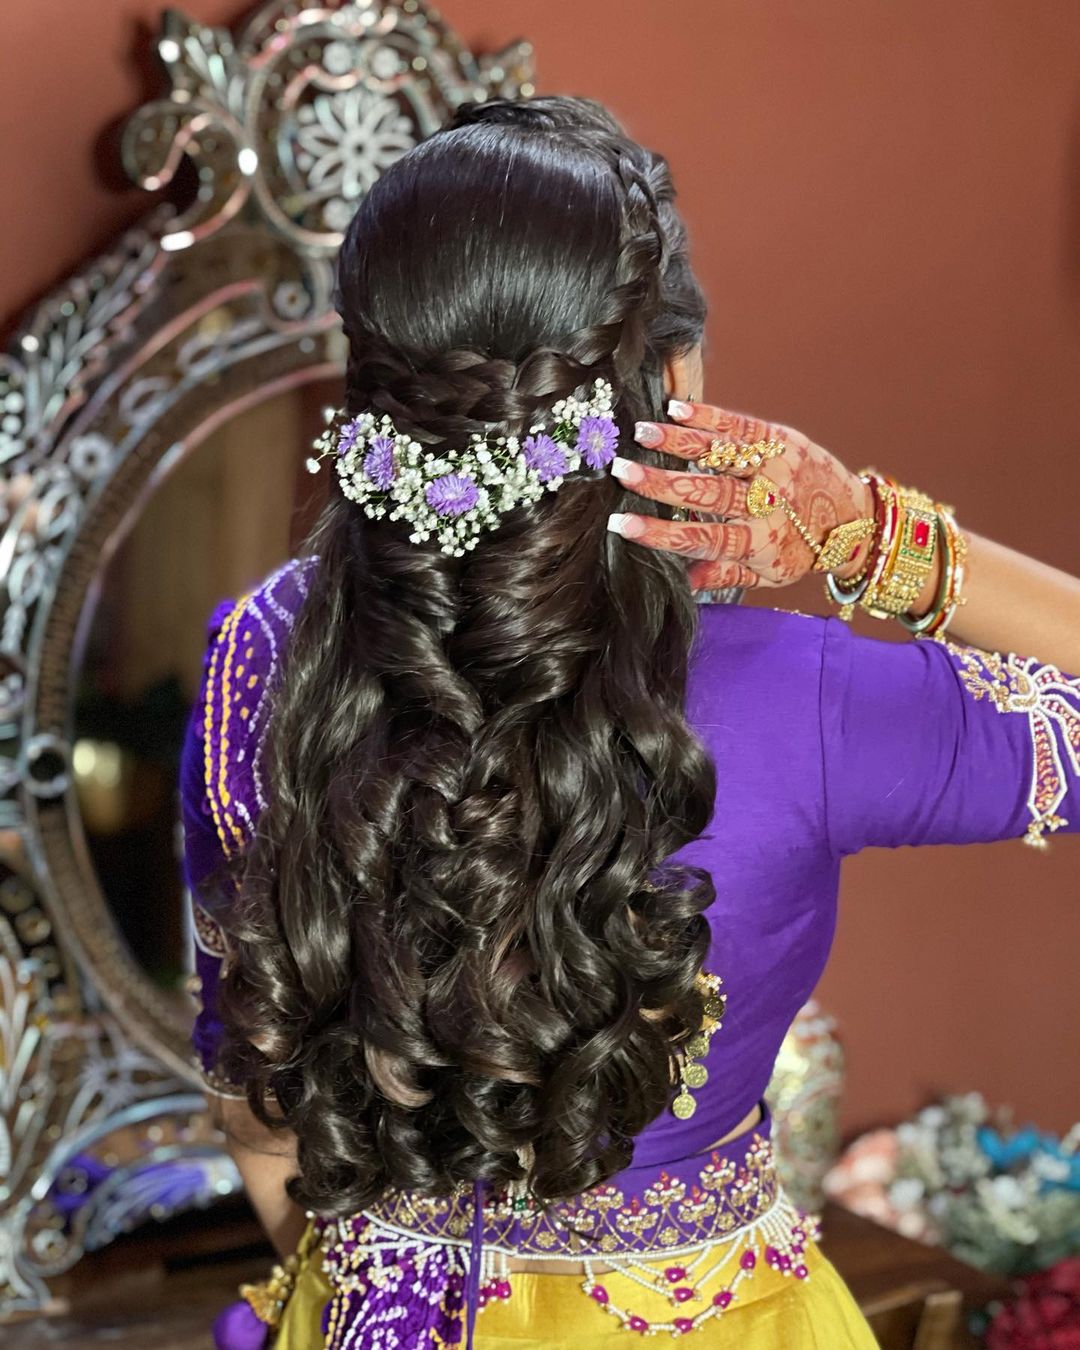 17 Stunning Half Saree - Langa Voni - Understanding Half Saree